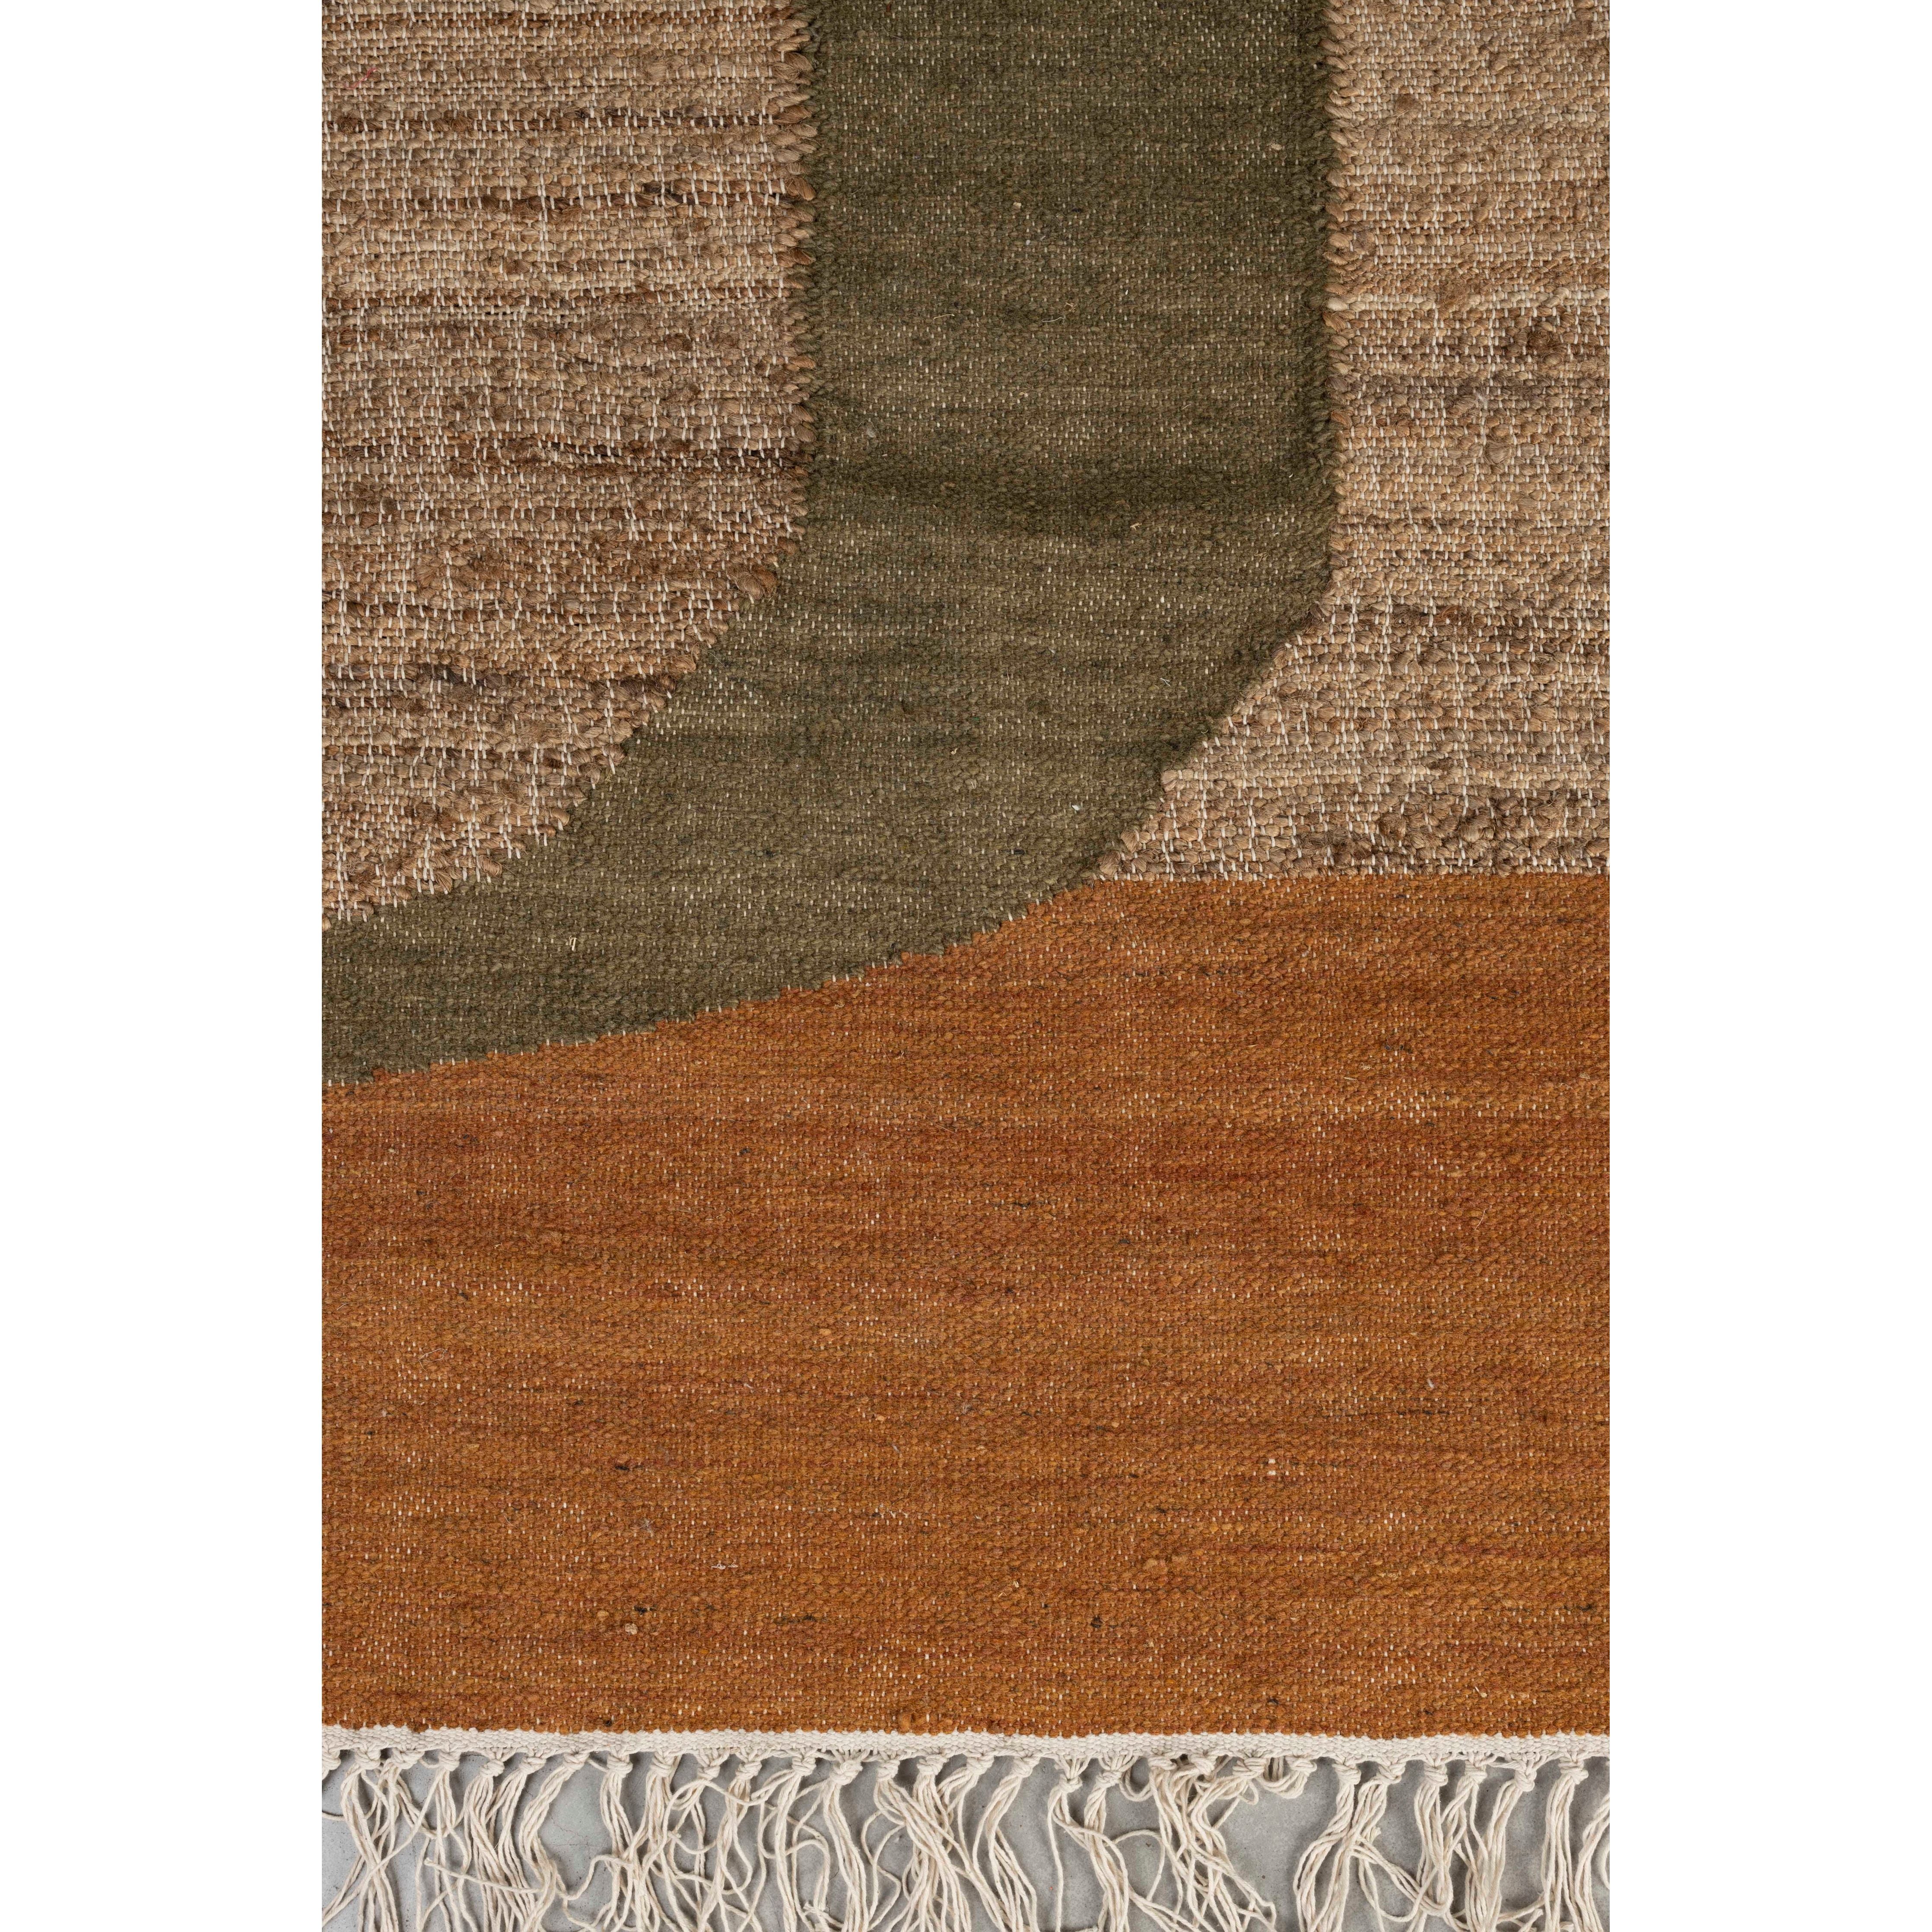 Carpet pavilion 160x230 natural green brown